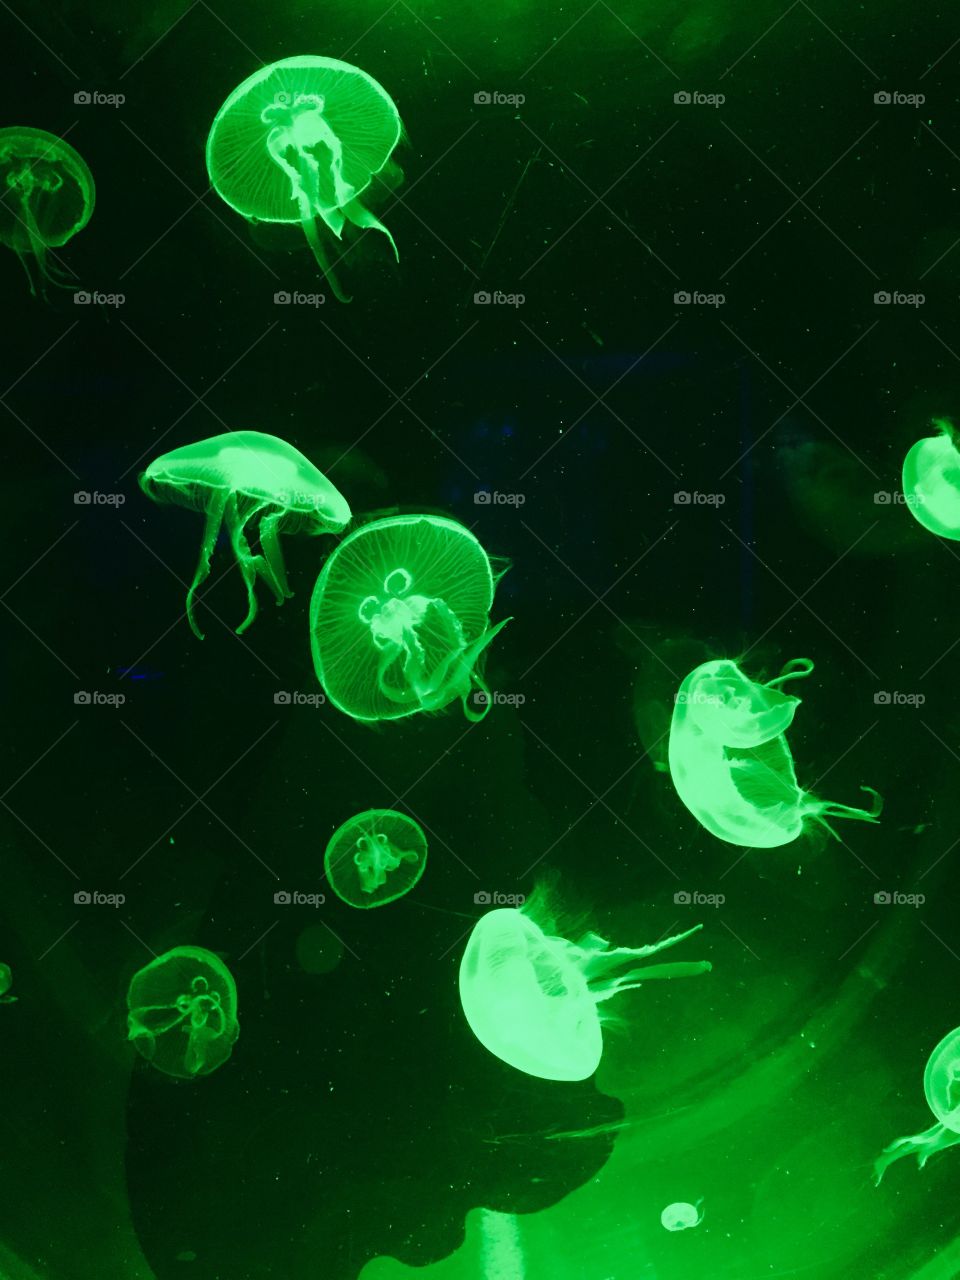 Jellyfish Sea Life Ocean World. A green version of the jellyfish Sea Life Ocean World in Bangkok, Thailand.